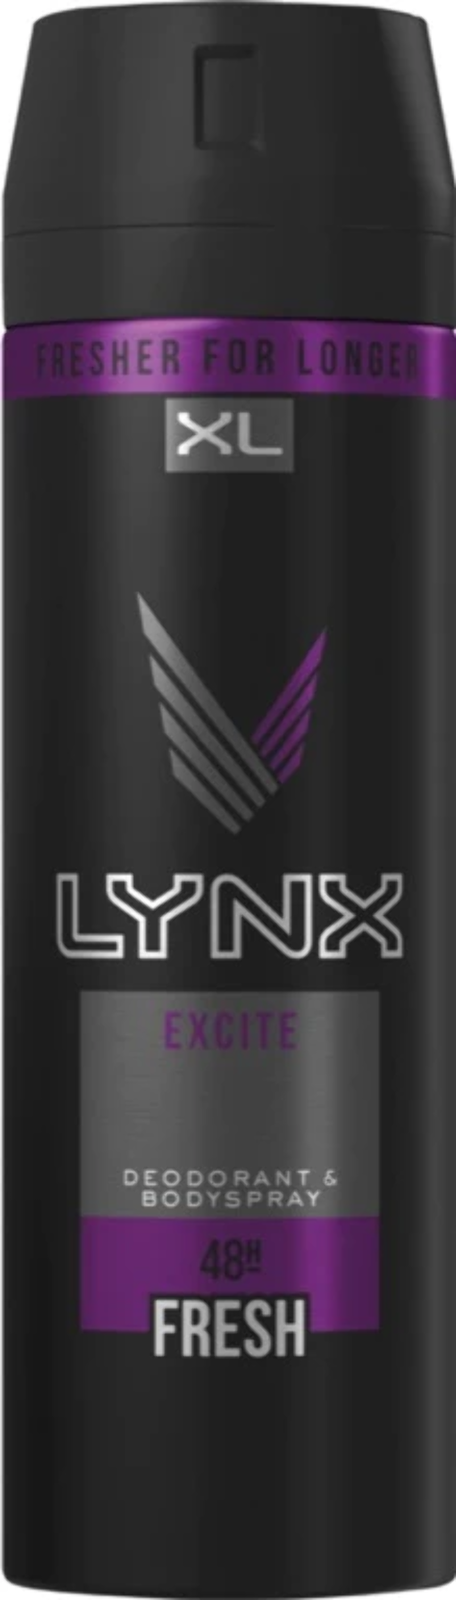 LYNX BODYSPRAY EXCITE - 200ML